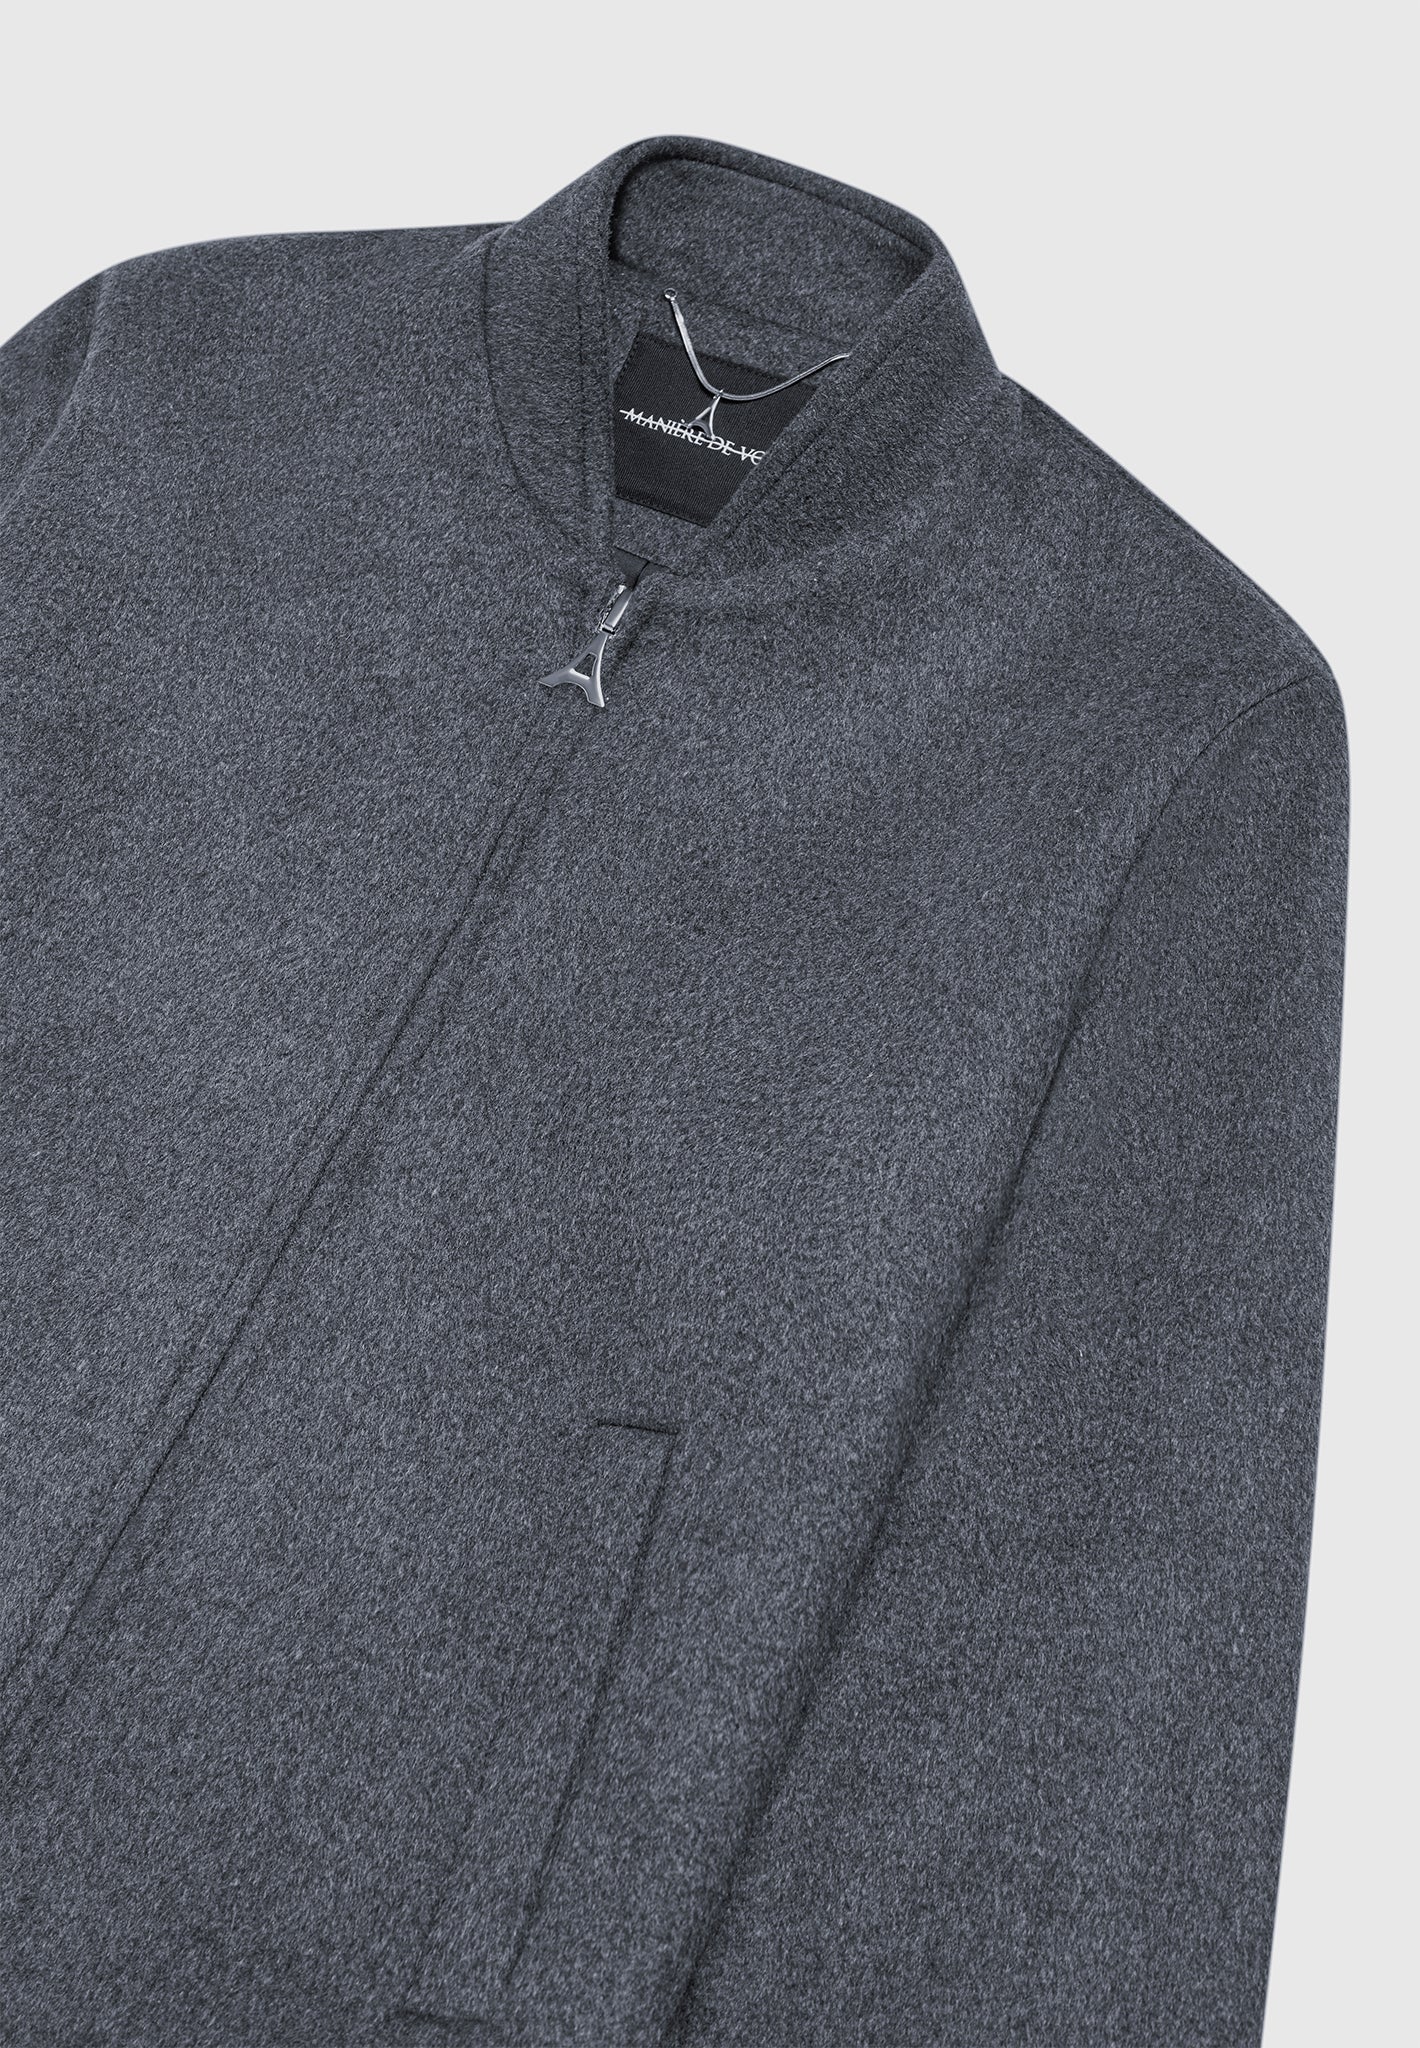 wool-blend-marl-bomber-jacket-charcoal-grey